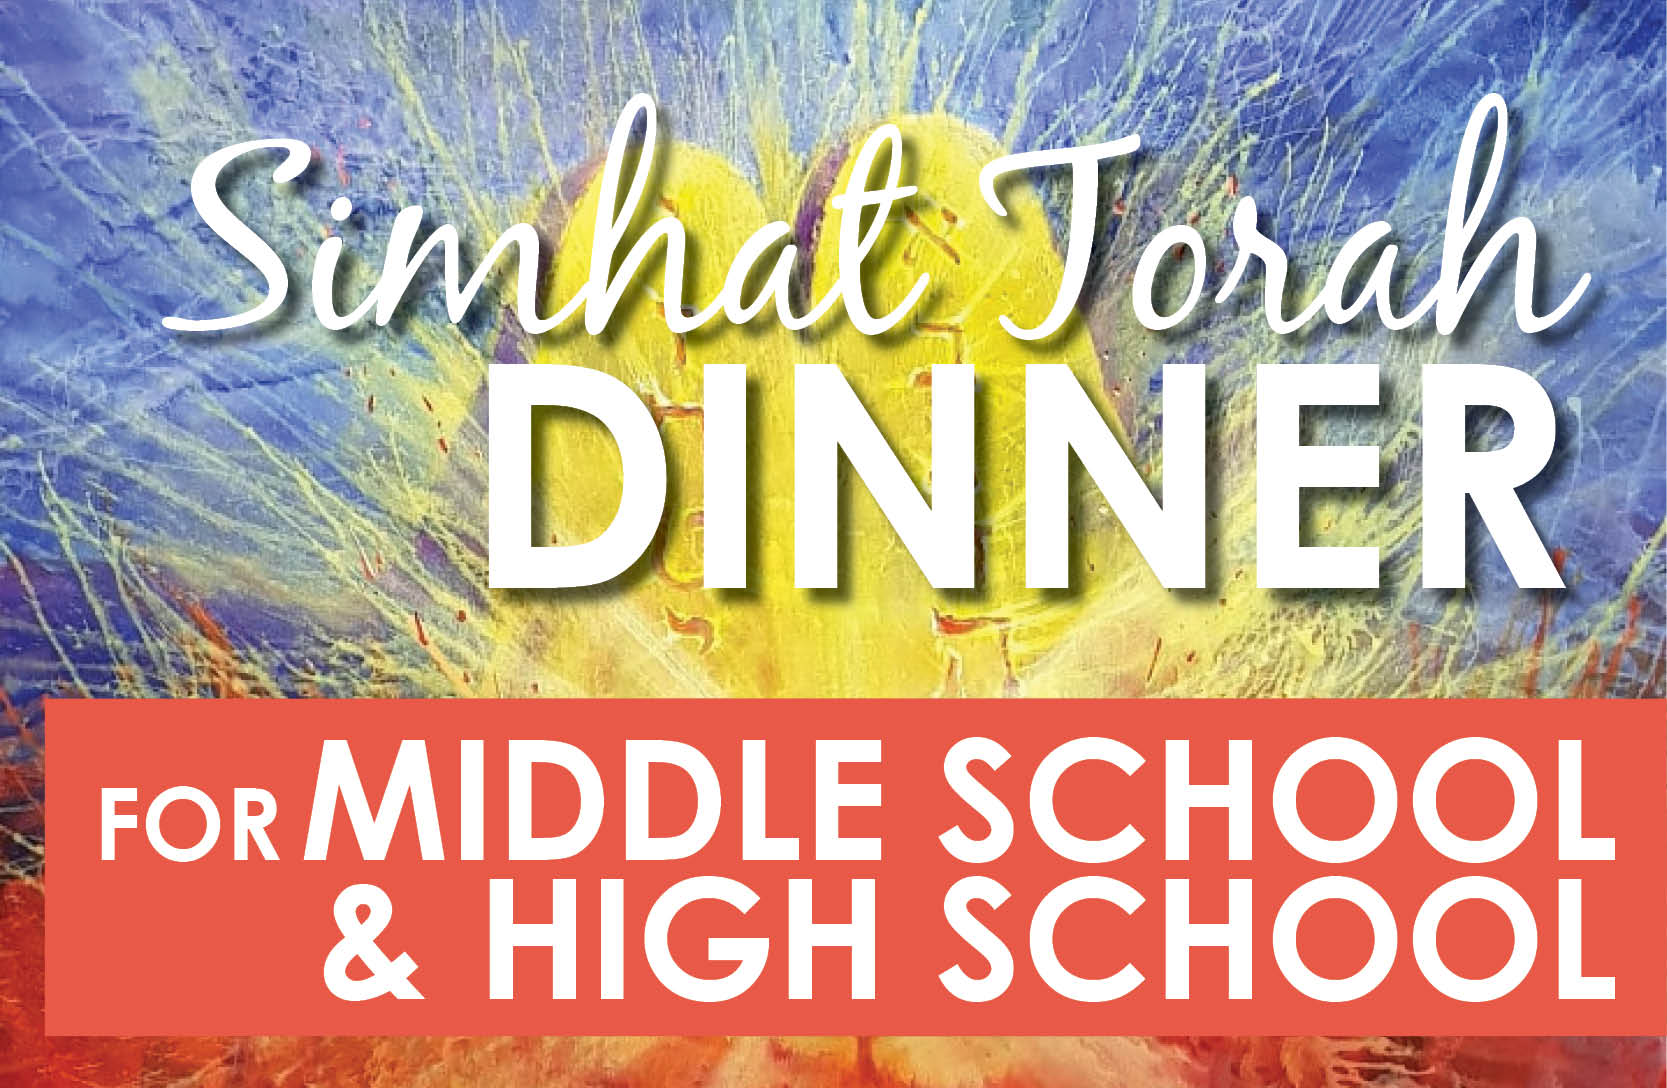 Simhat Torah Dinner for Middle School & High School